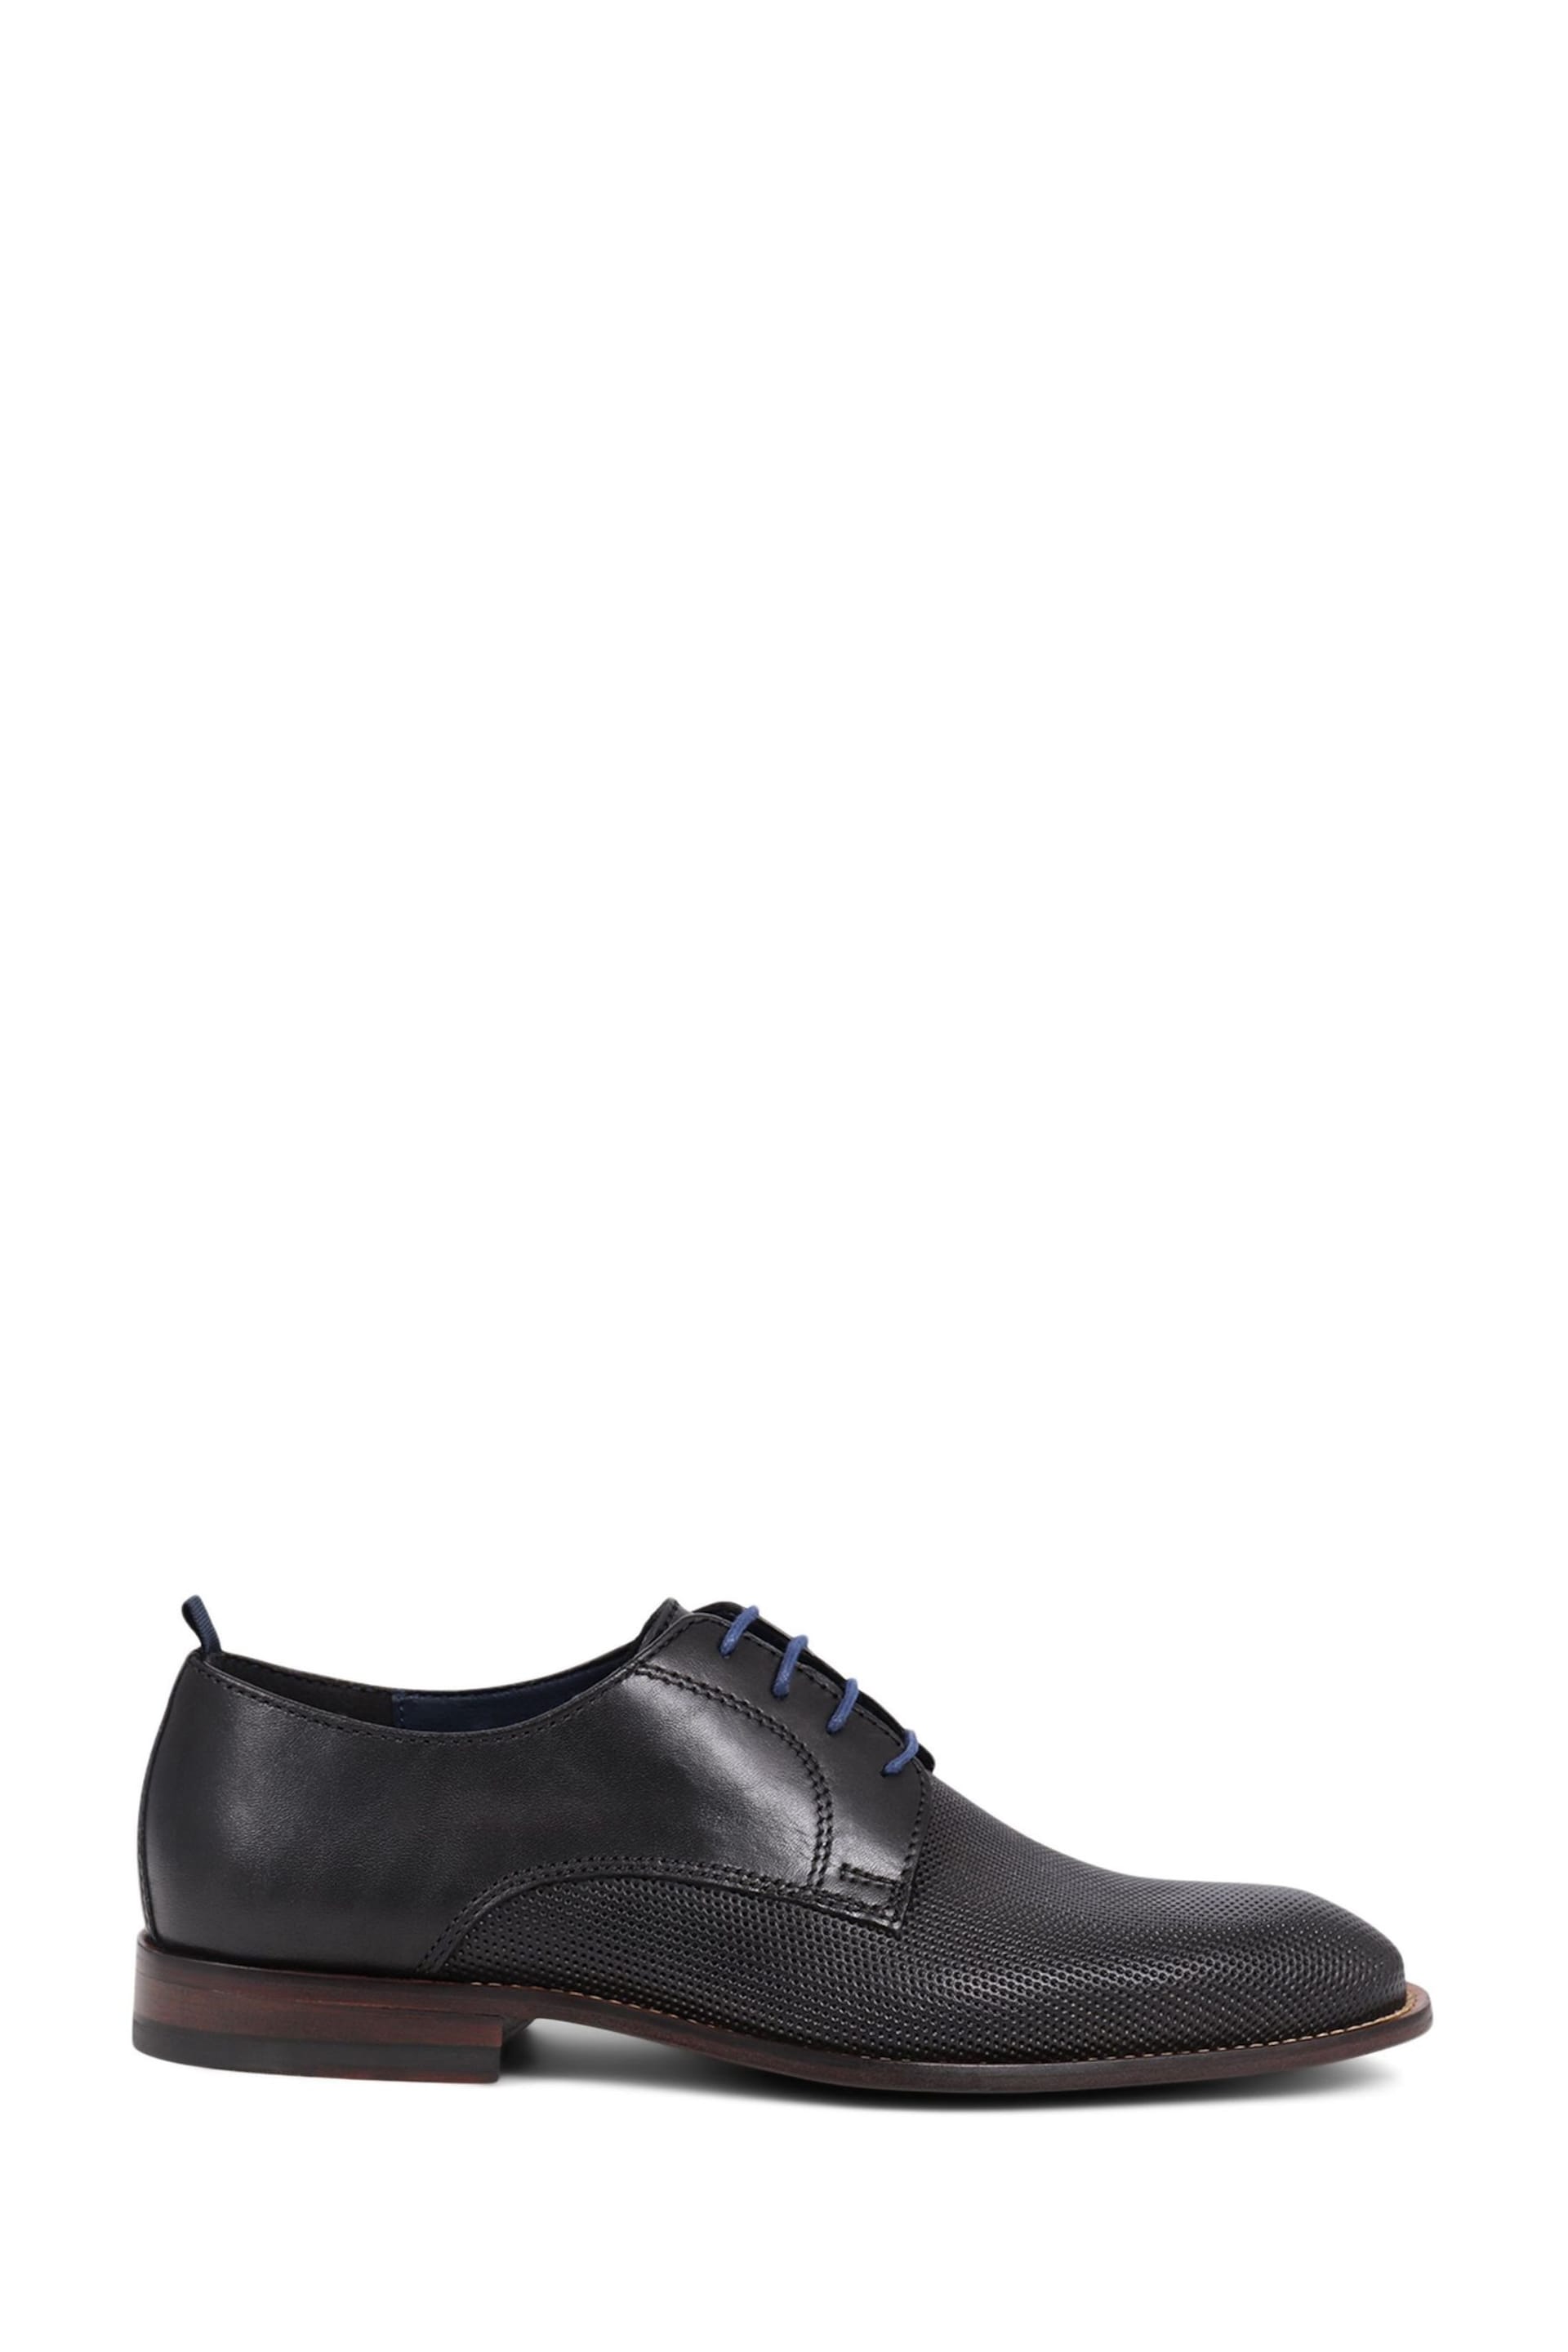 Pavers Lace-Up Smart Black Shoes - Image 2 of 5